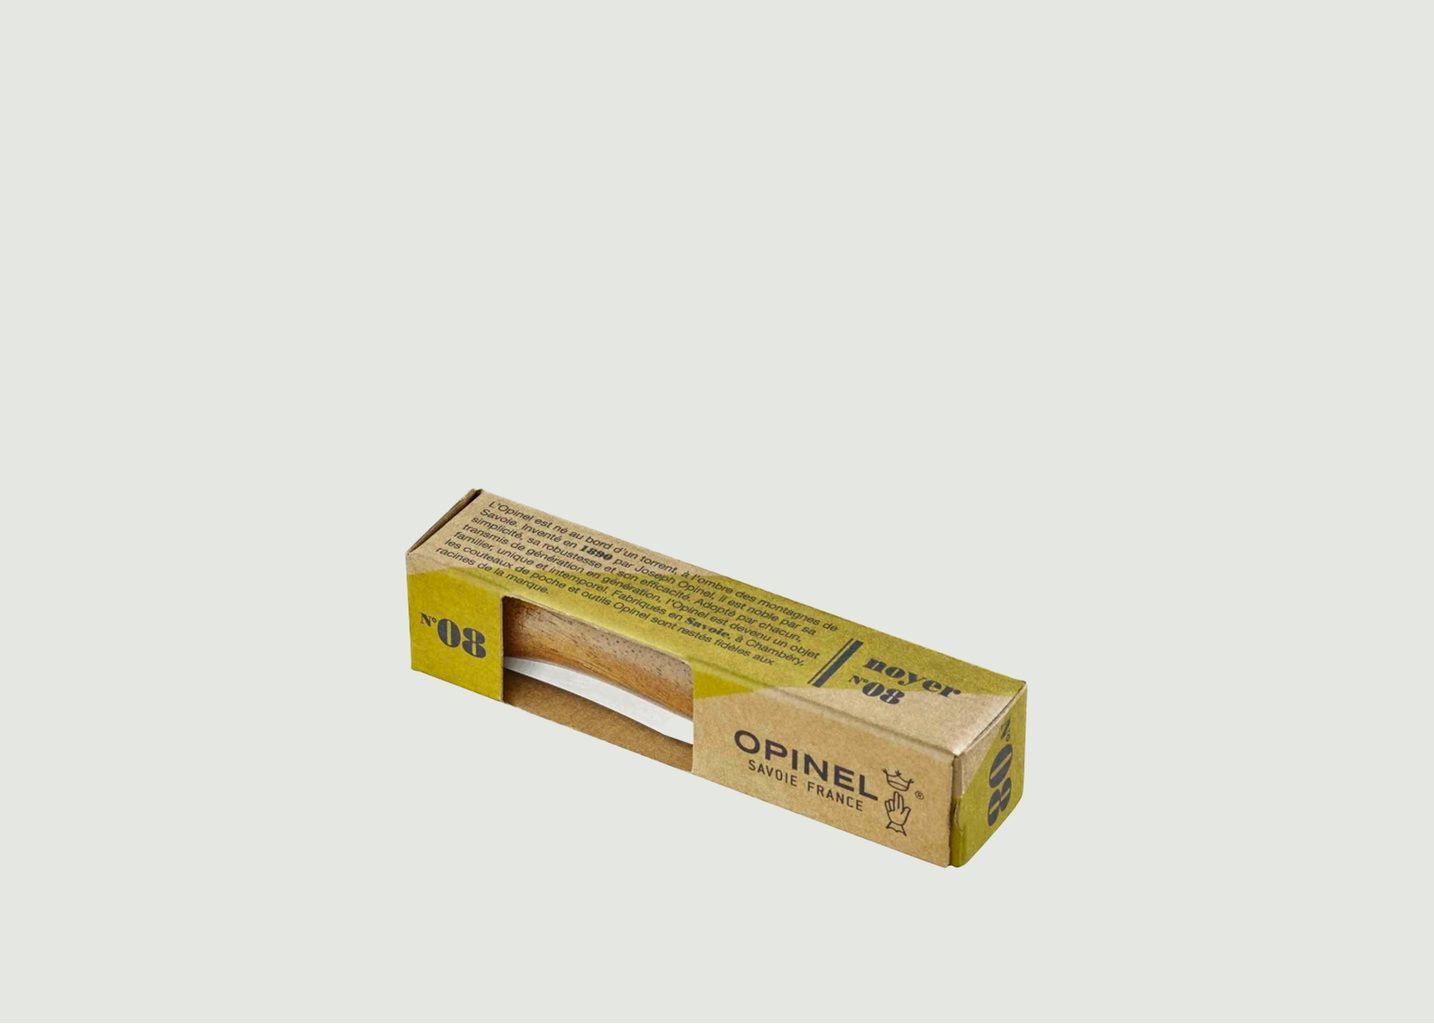 Box N°08 Stainless steel Walnut - Opinel